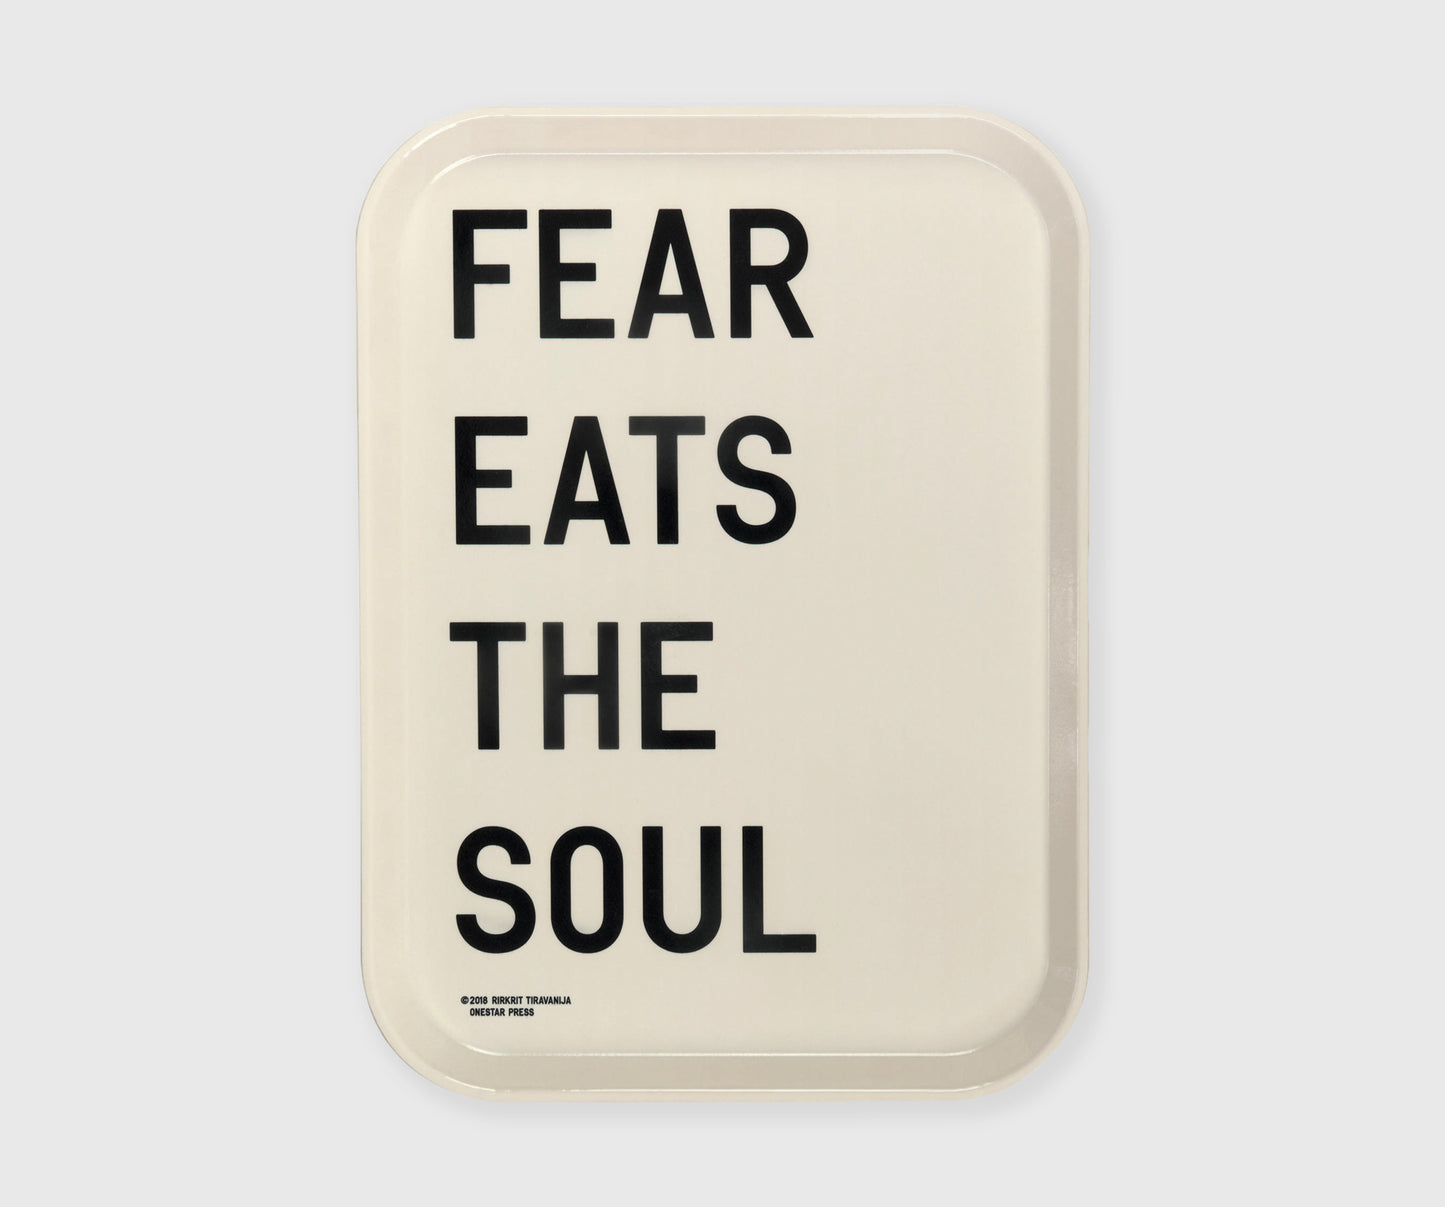 Rirkrit Tiravanija: FEAR EATS THE SOUL